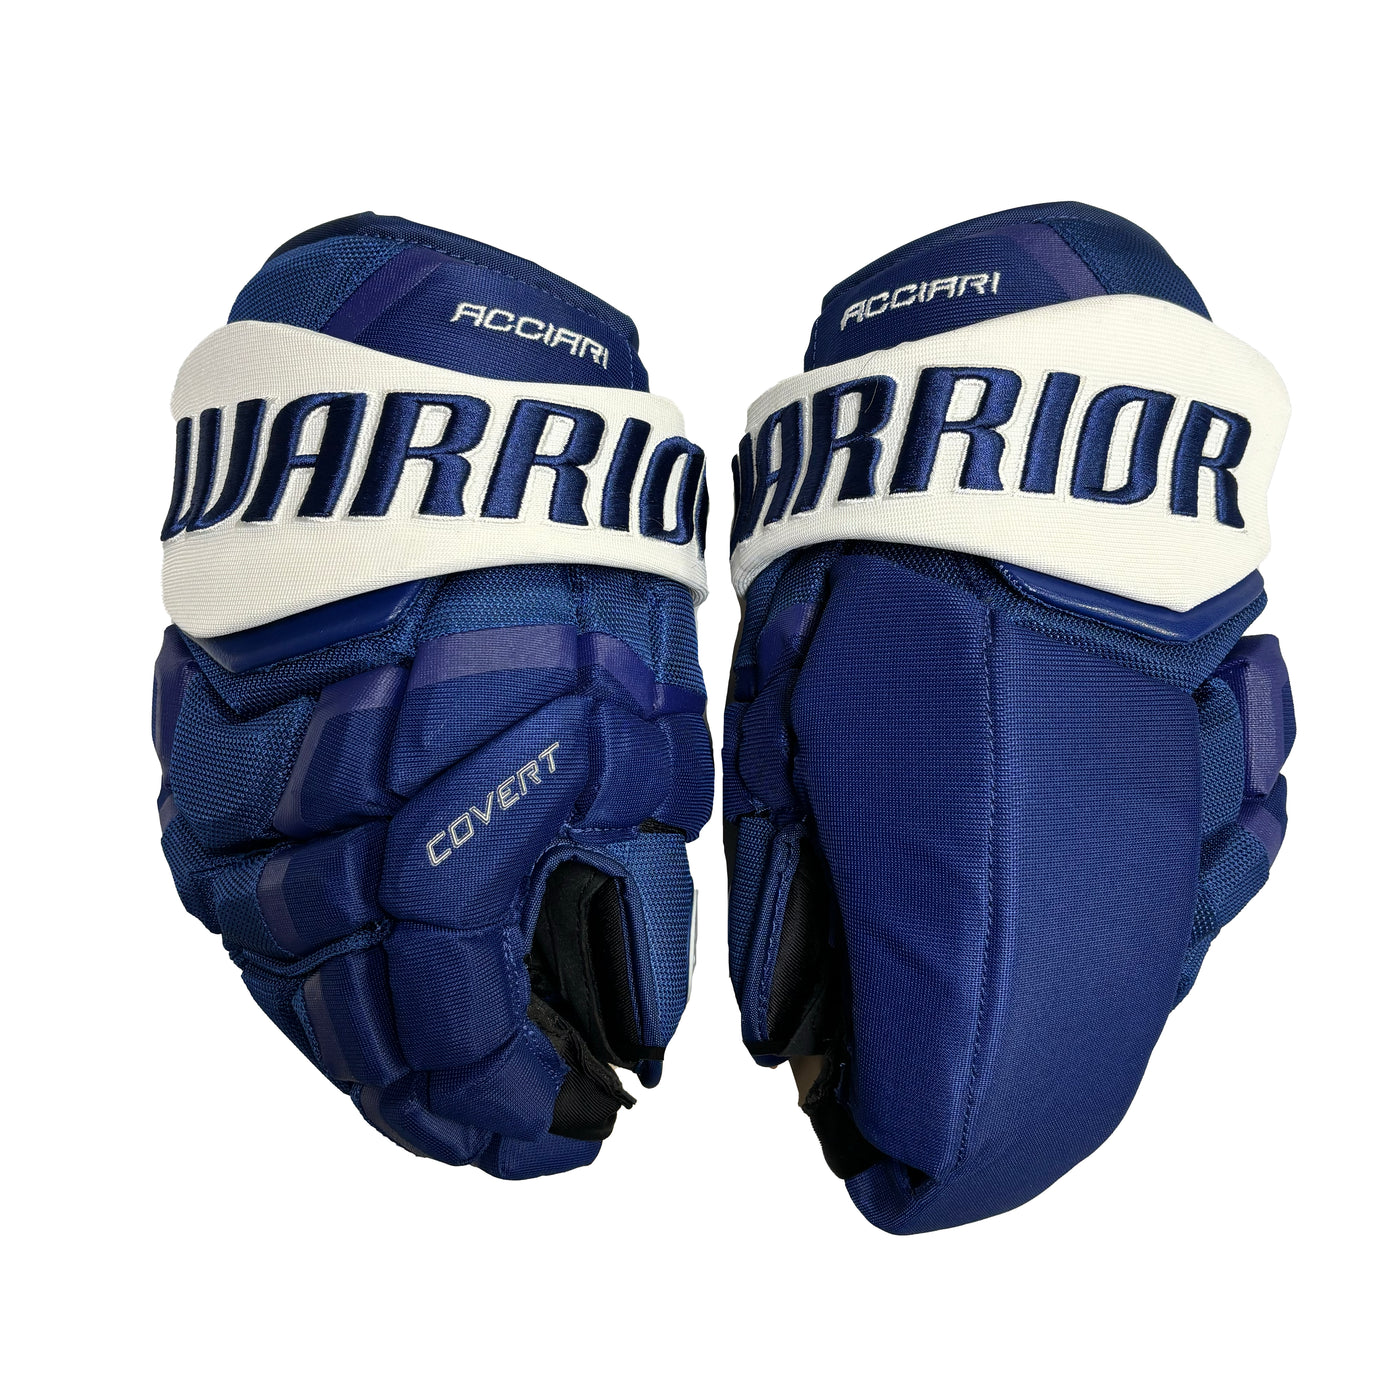 Warrior Covert QRL - Toronto Maple Leafs - Pro Stock Glove - Noel Acciari